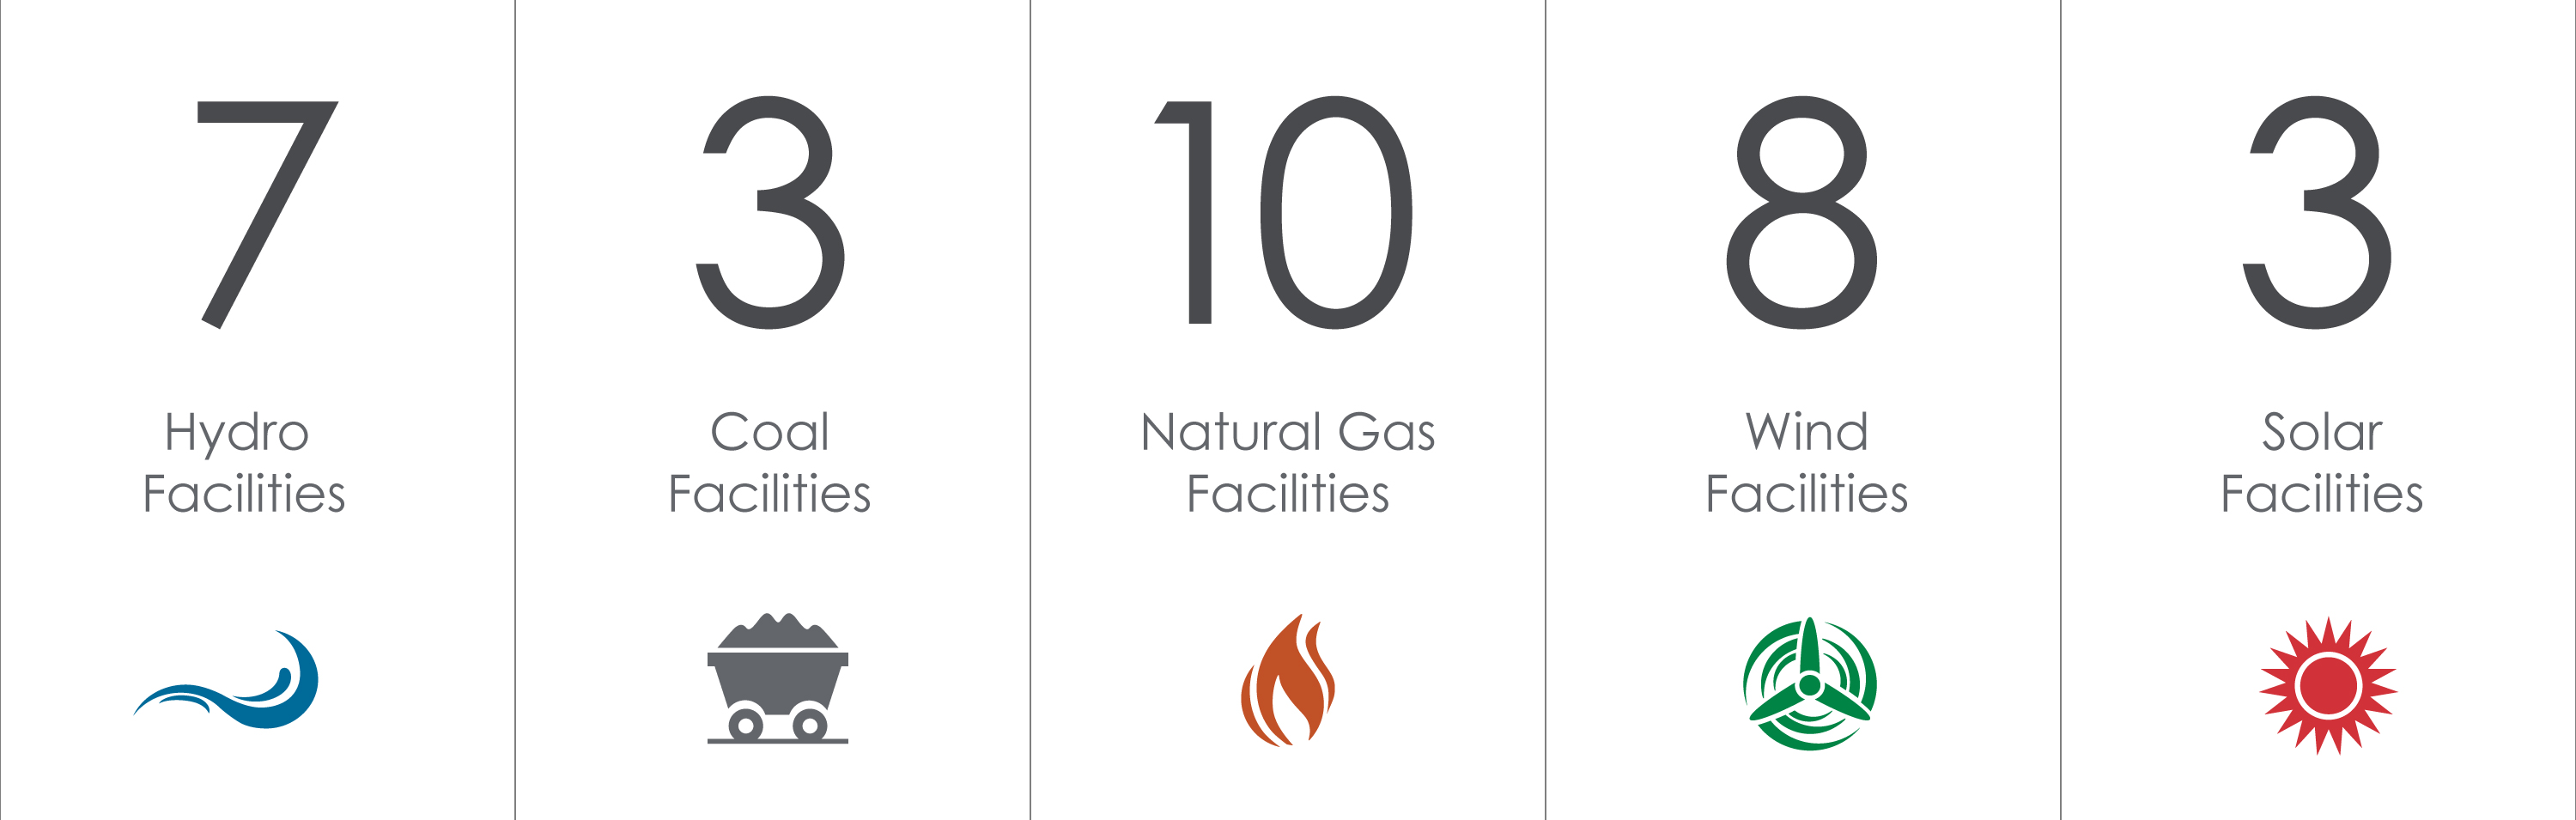 8 Hydro facilities, 3 Coal facilities, 9 Natural Gas facilities, 6 Wind facilities